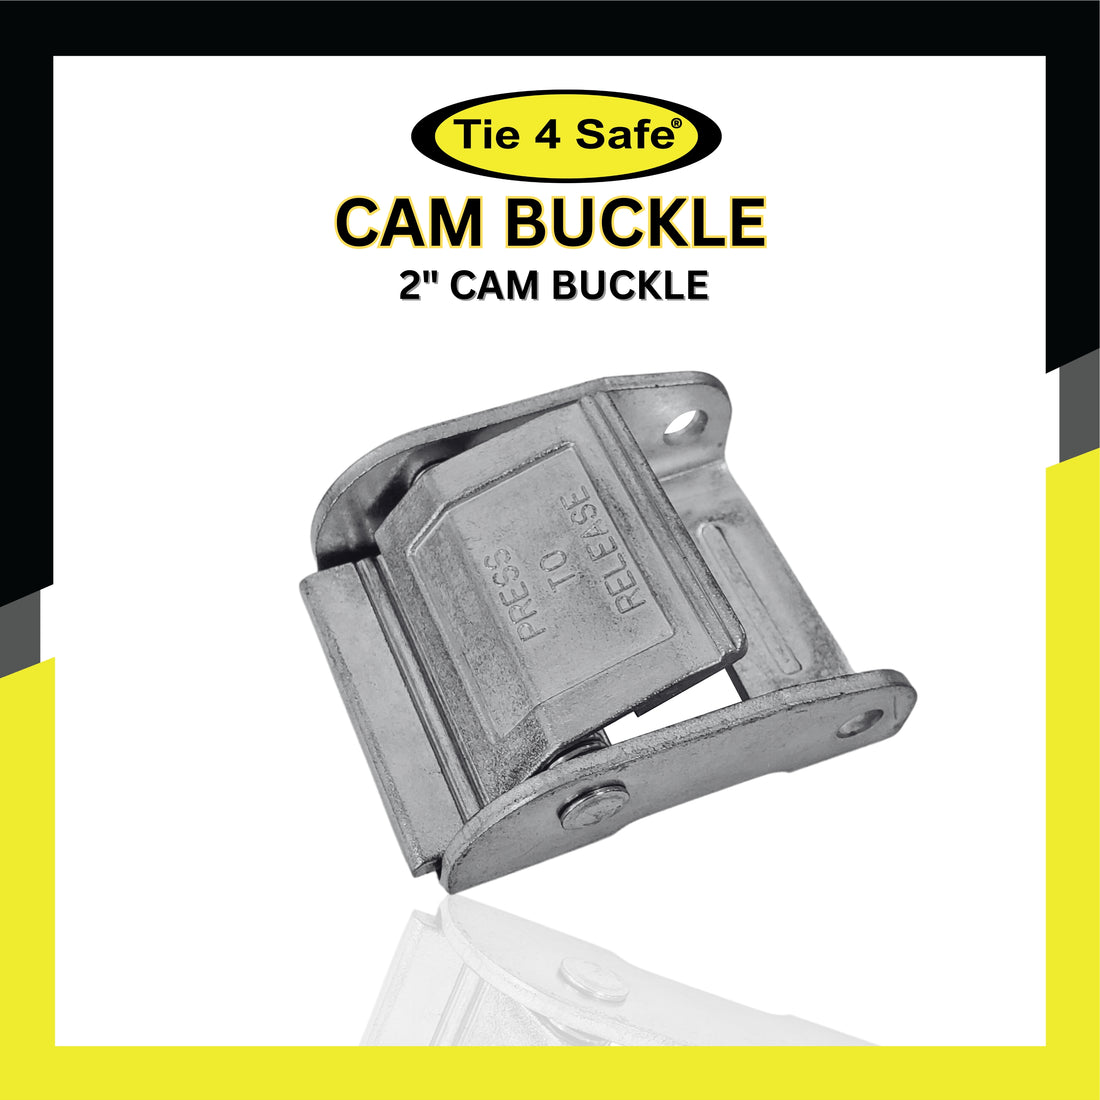 2" Cam Buckle - CB11-122